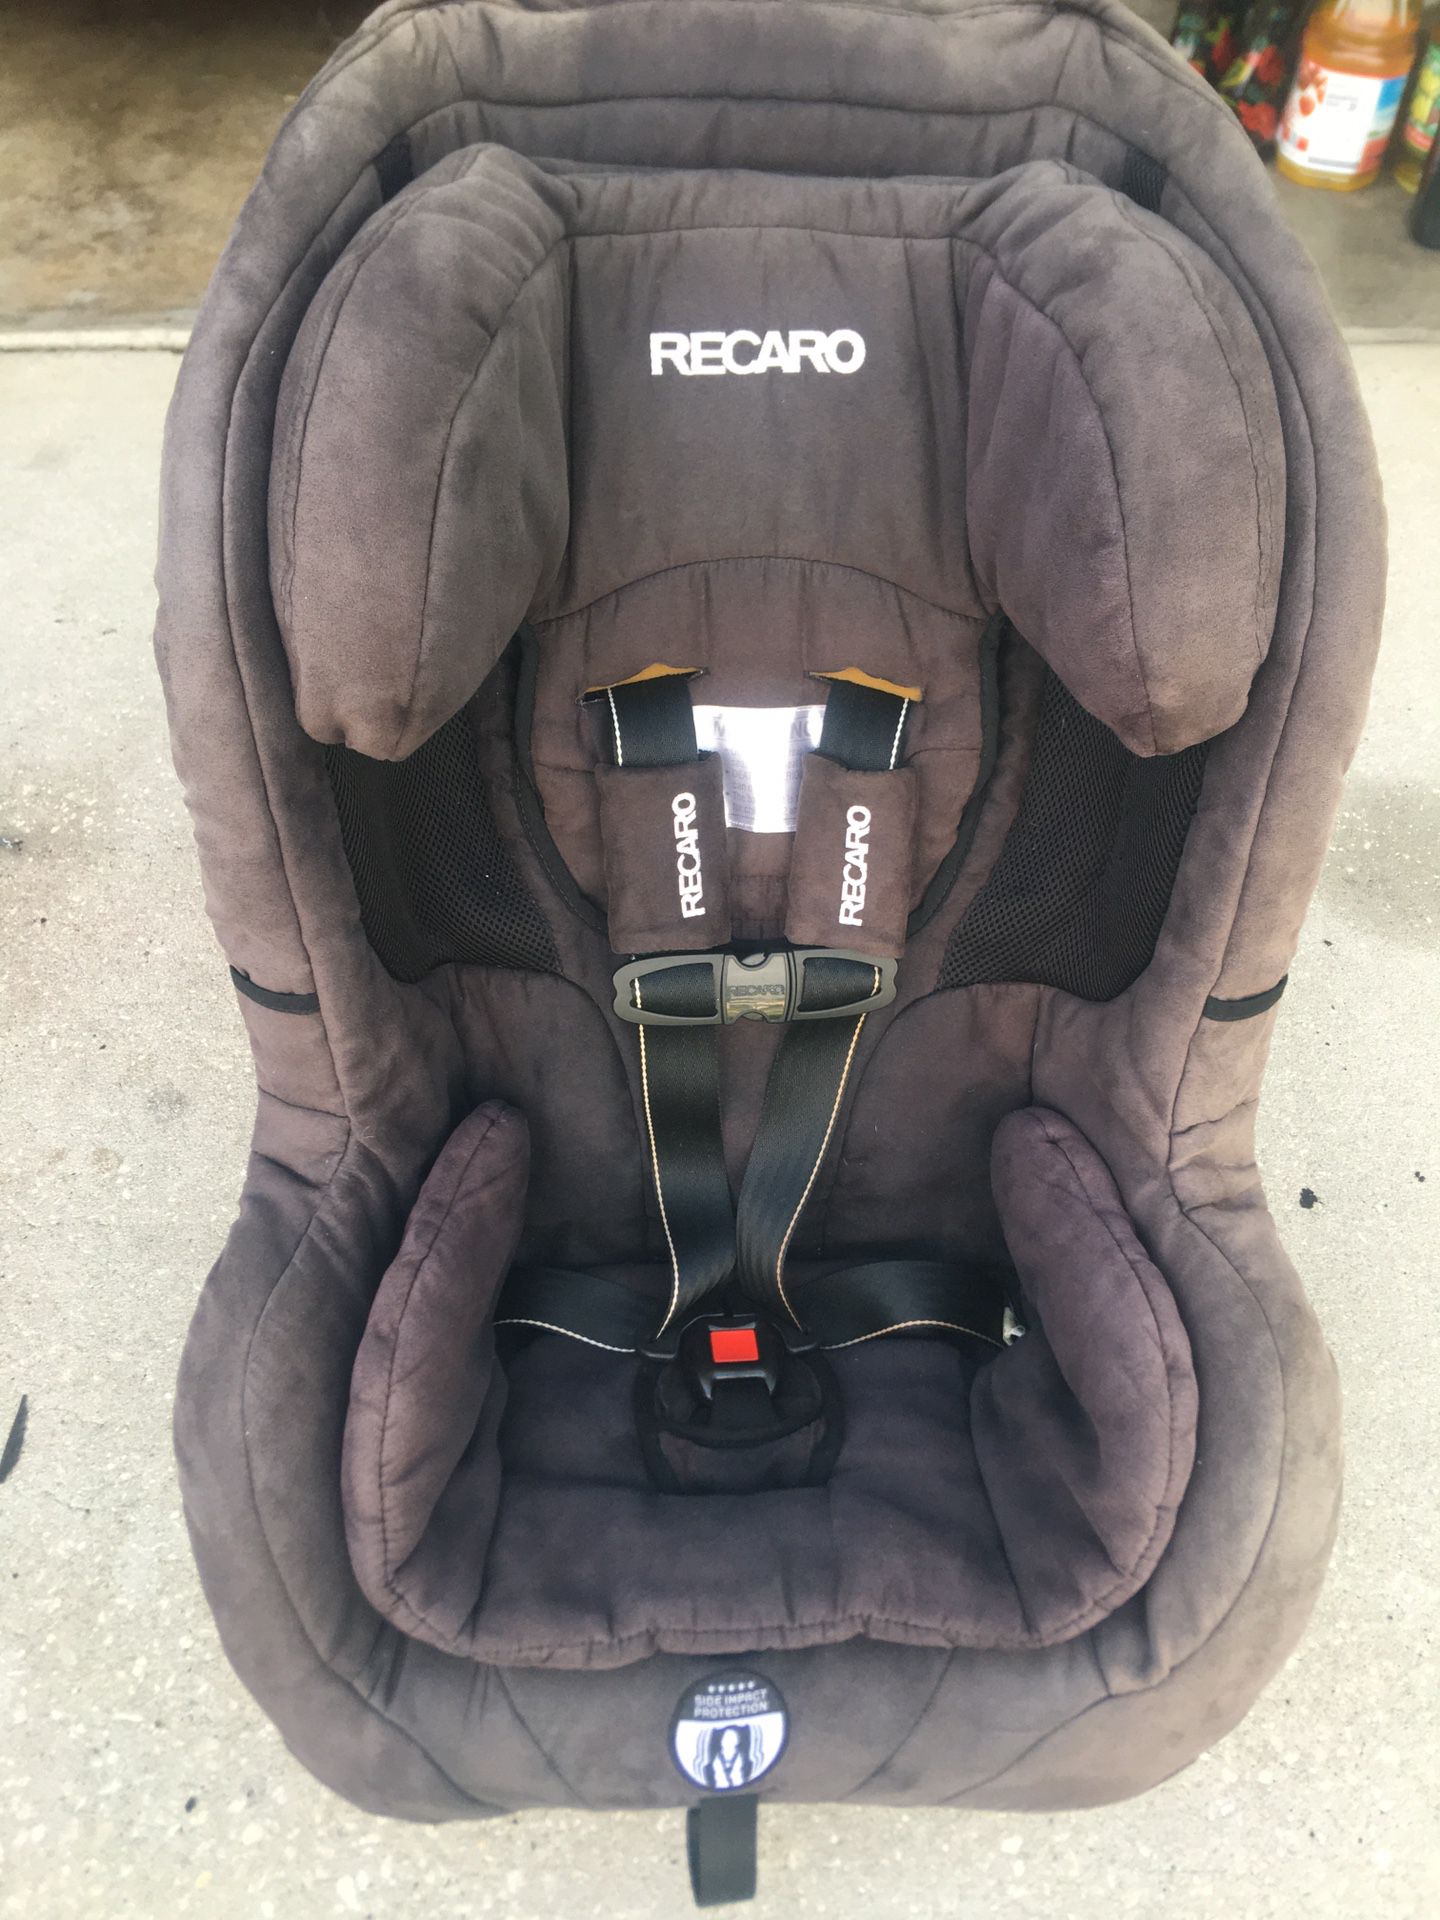 Recaro ProRide adjustable car seat